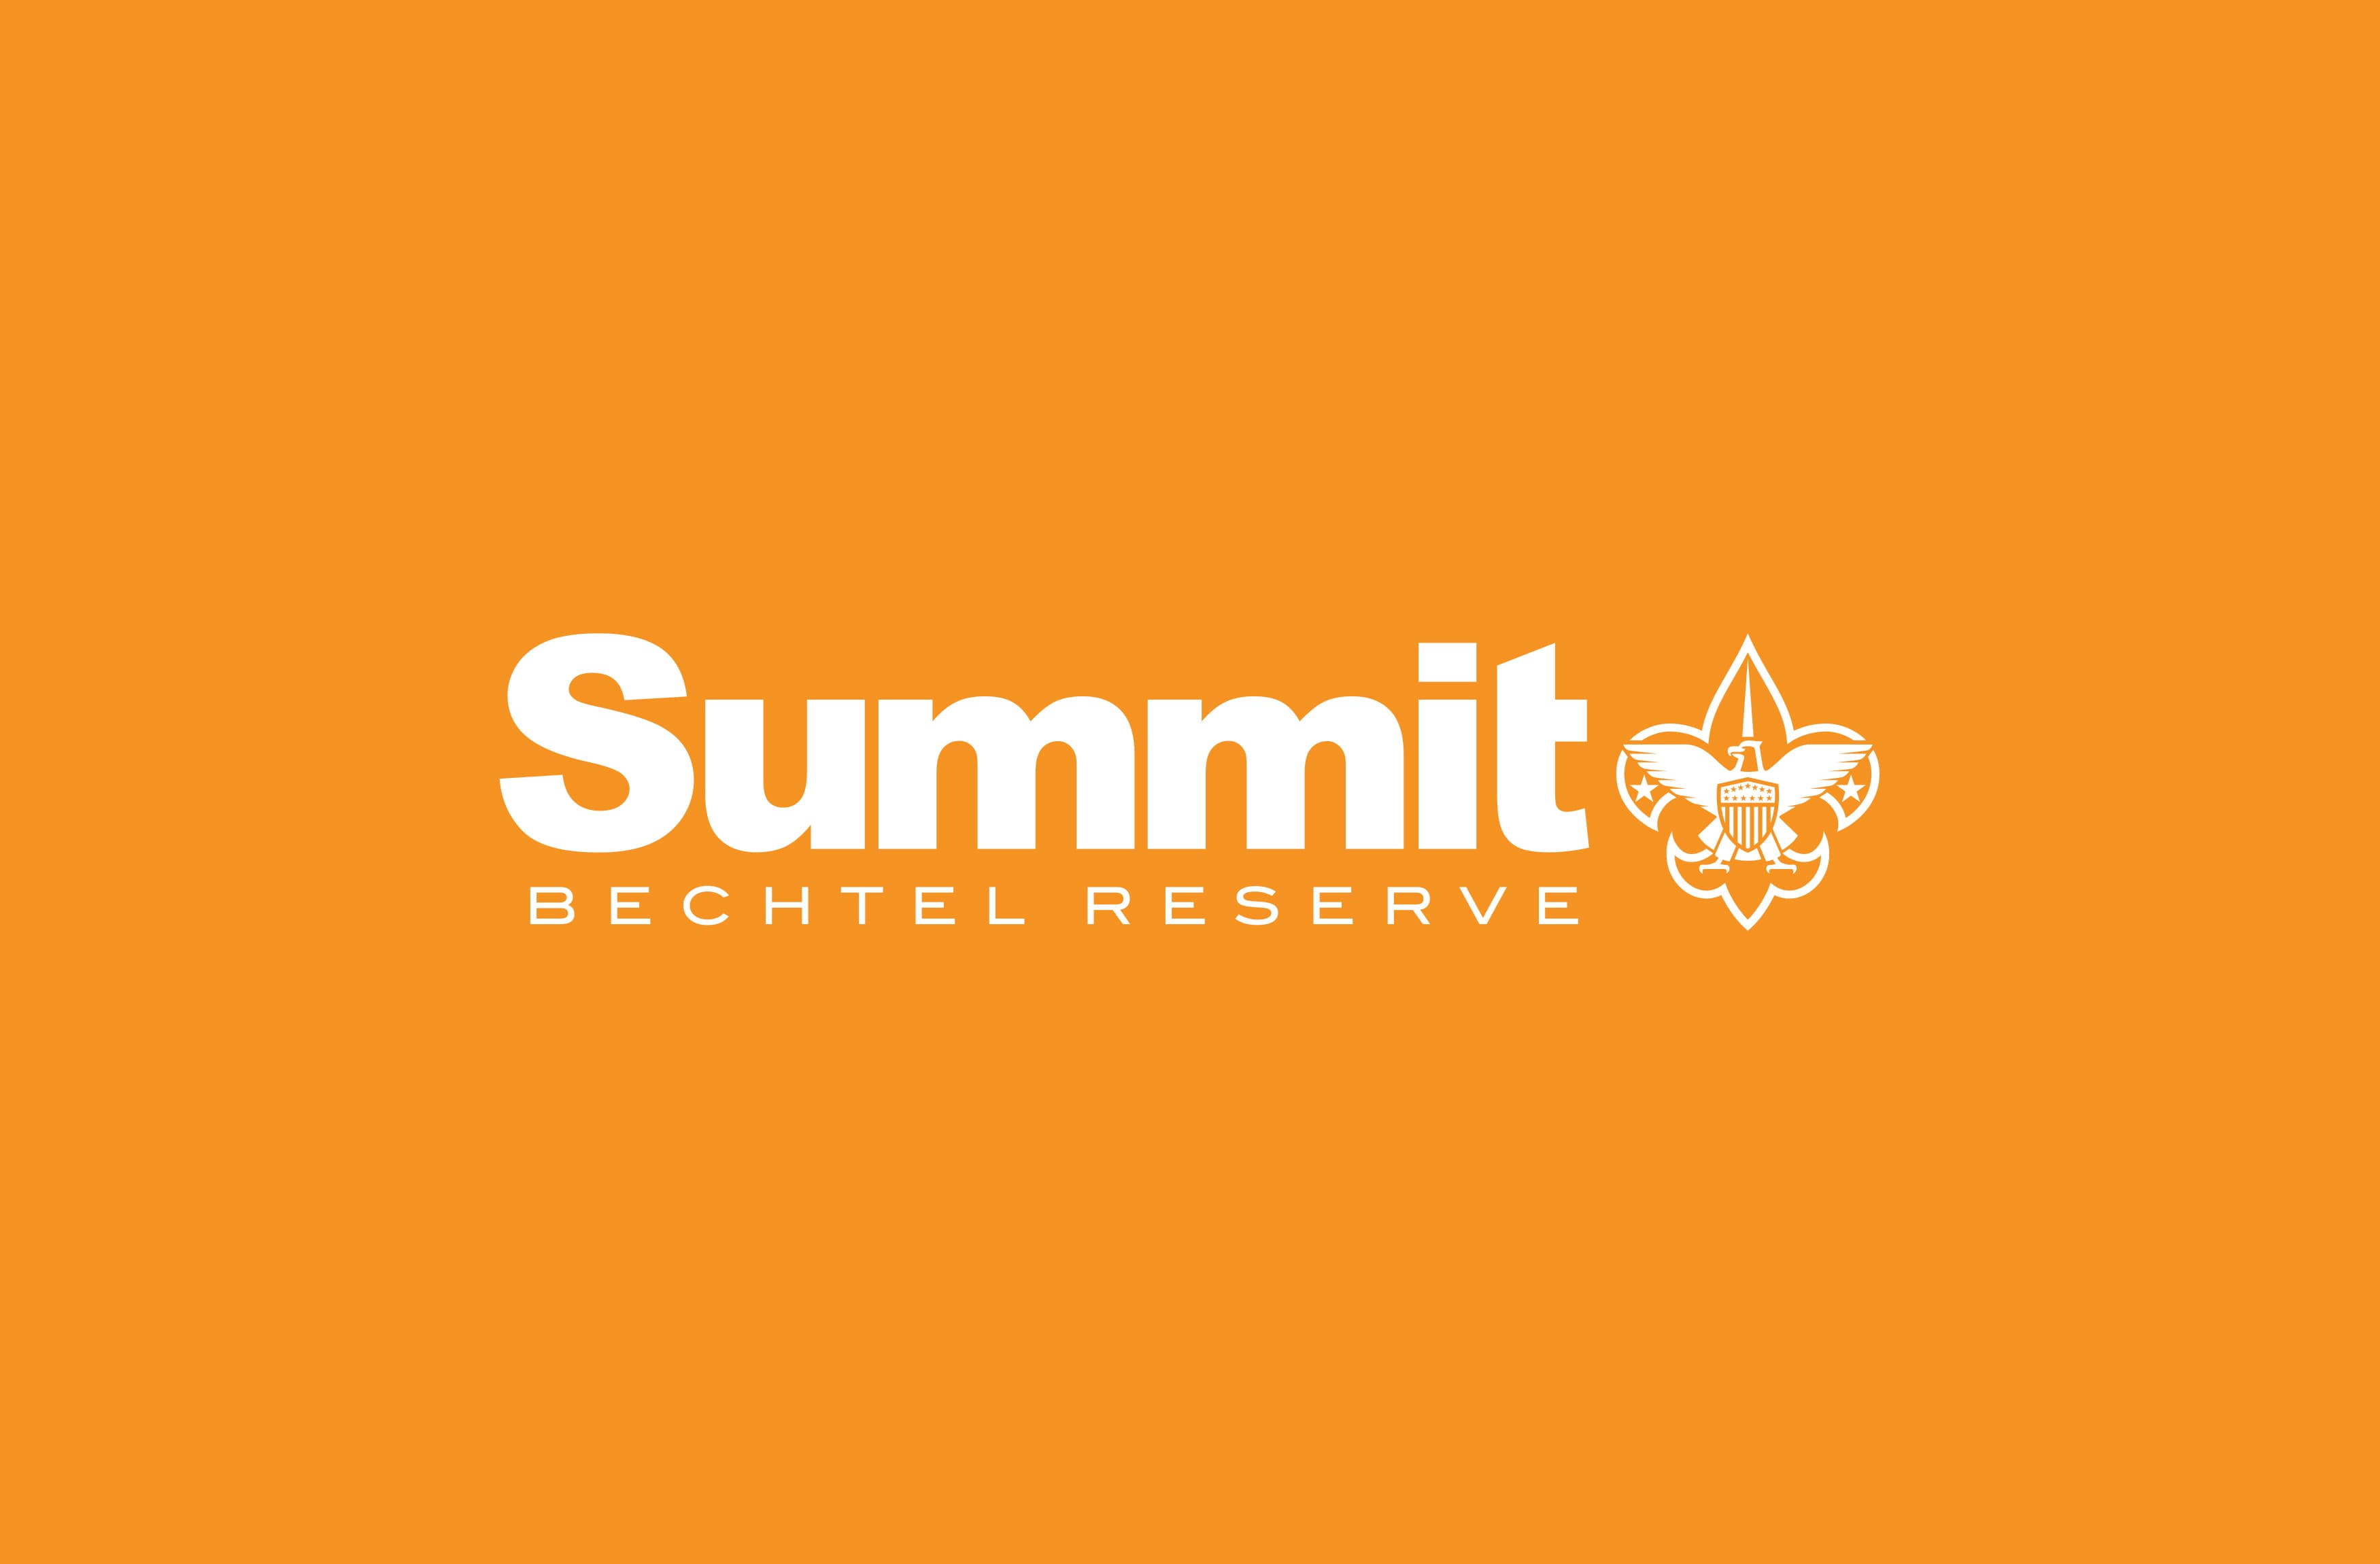 Boy Scouts of America, The Summit Bechtel Reserve branding 